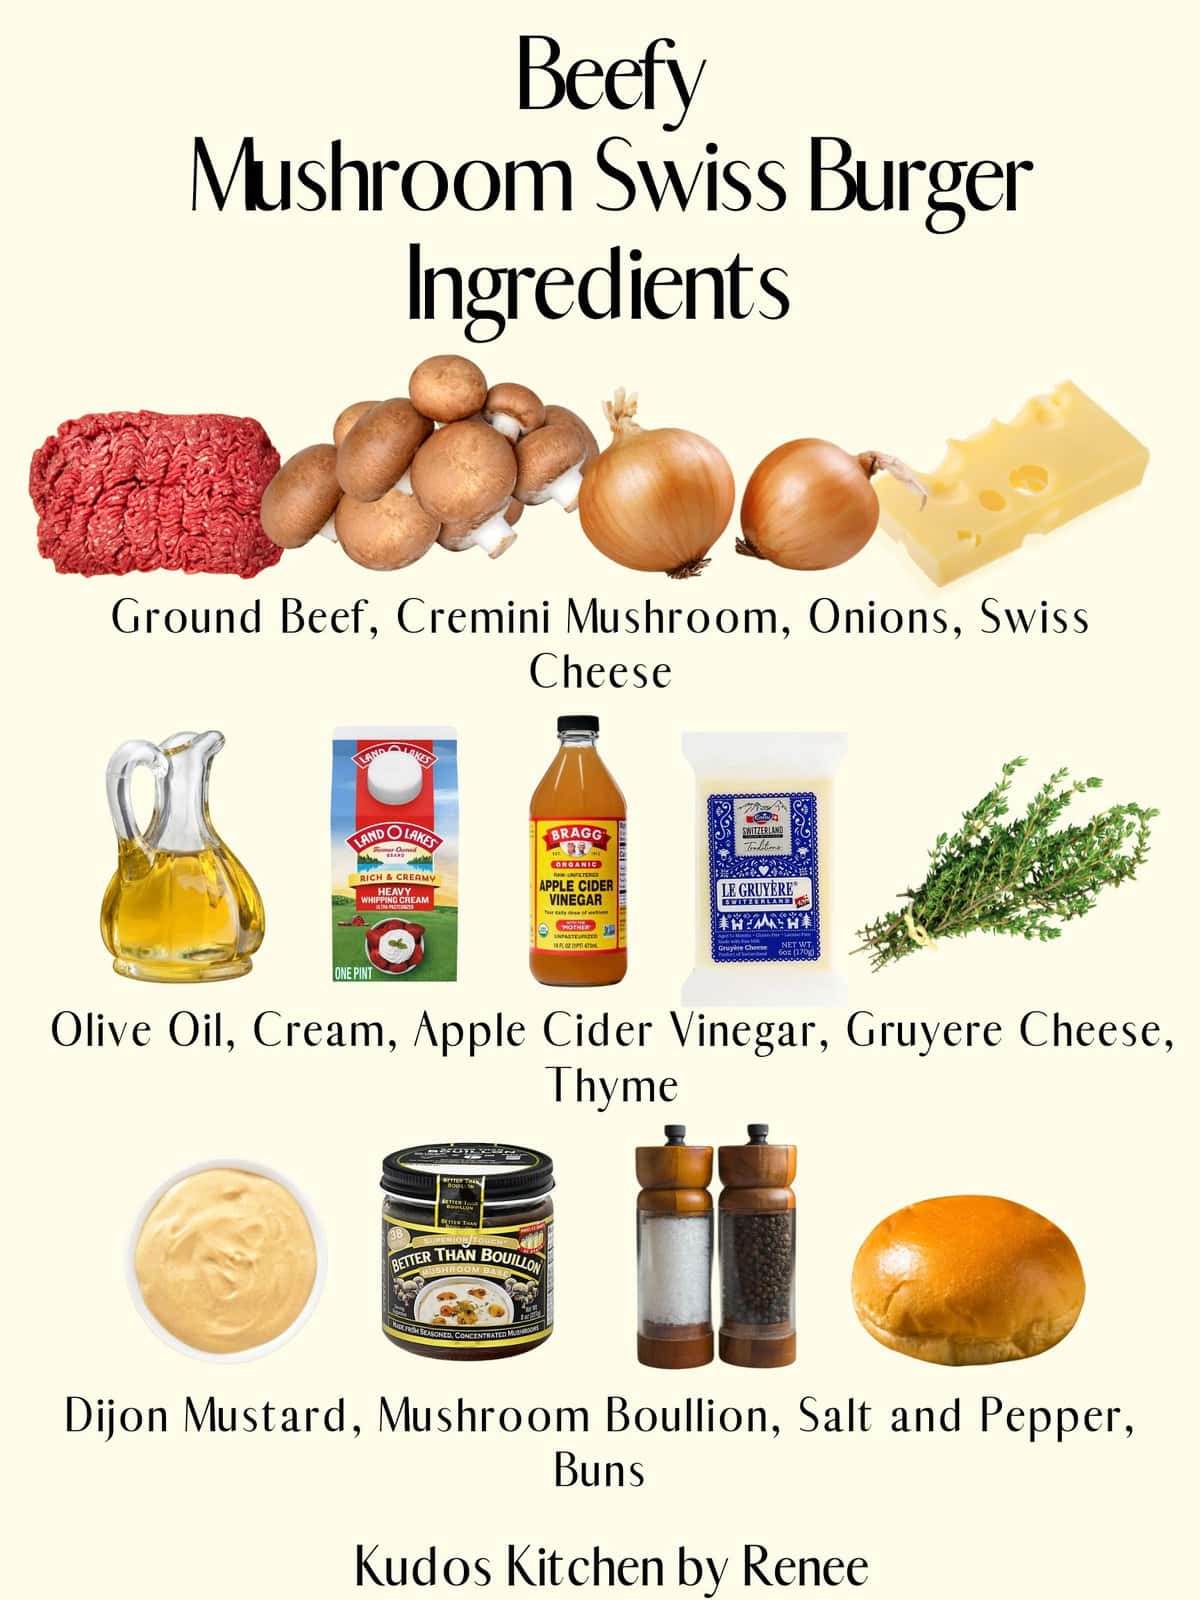 A visual ingredient list for making Mushroom Swiss Burgers